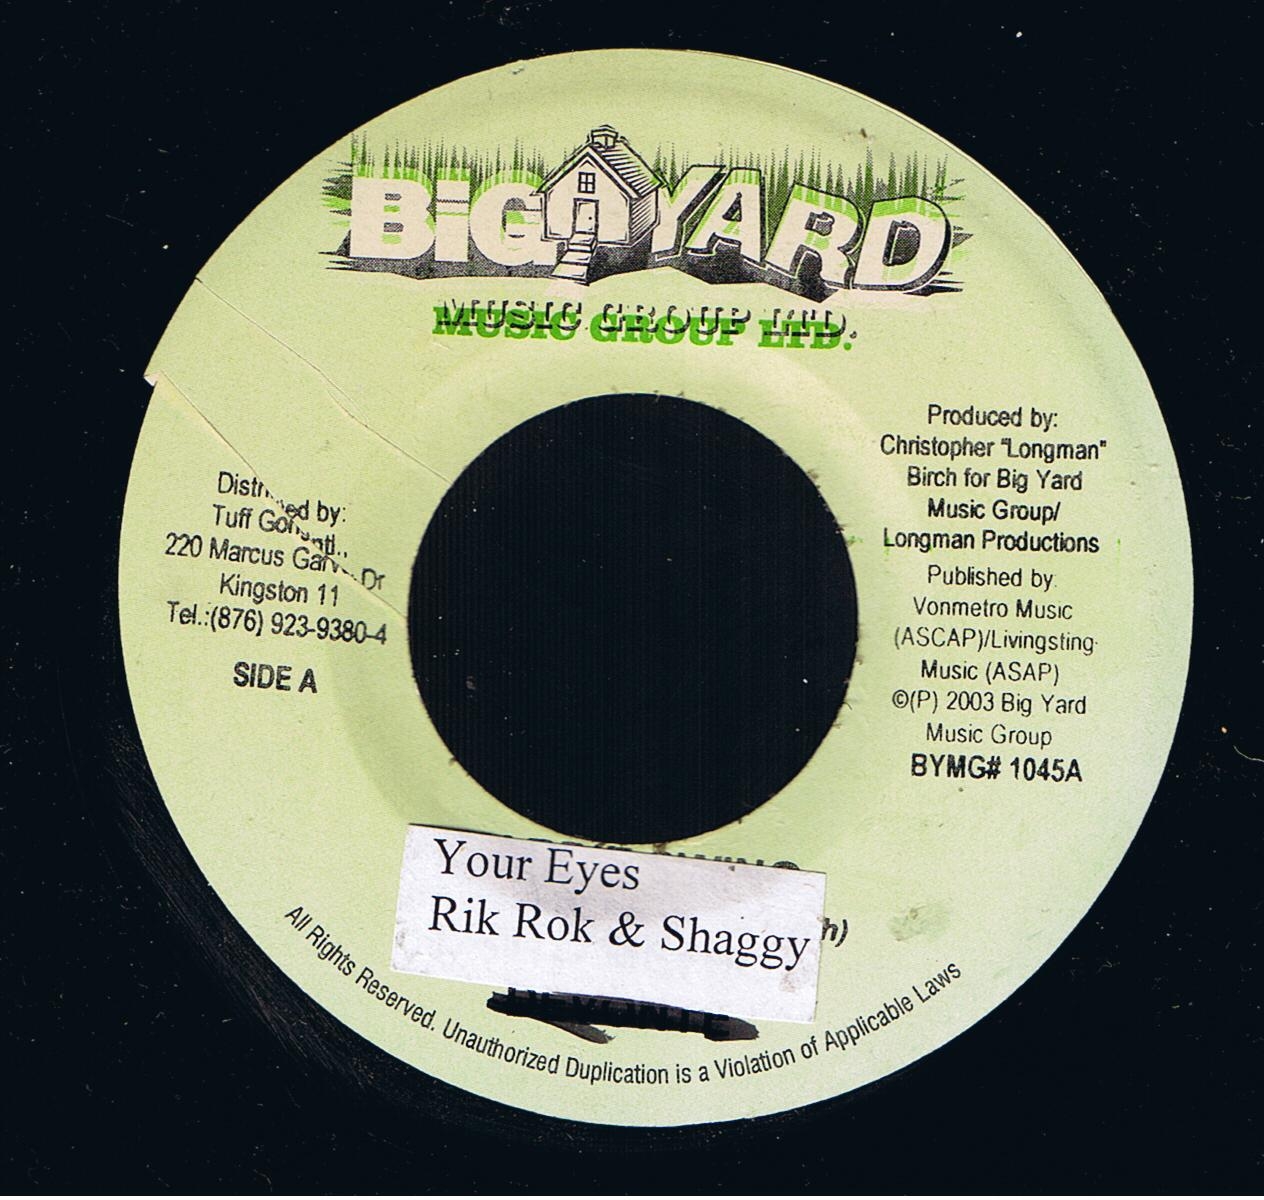 Rik Rok & Shaggy - Your Eyes / Ice Man - Girls Invasion (7") 